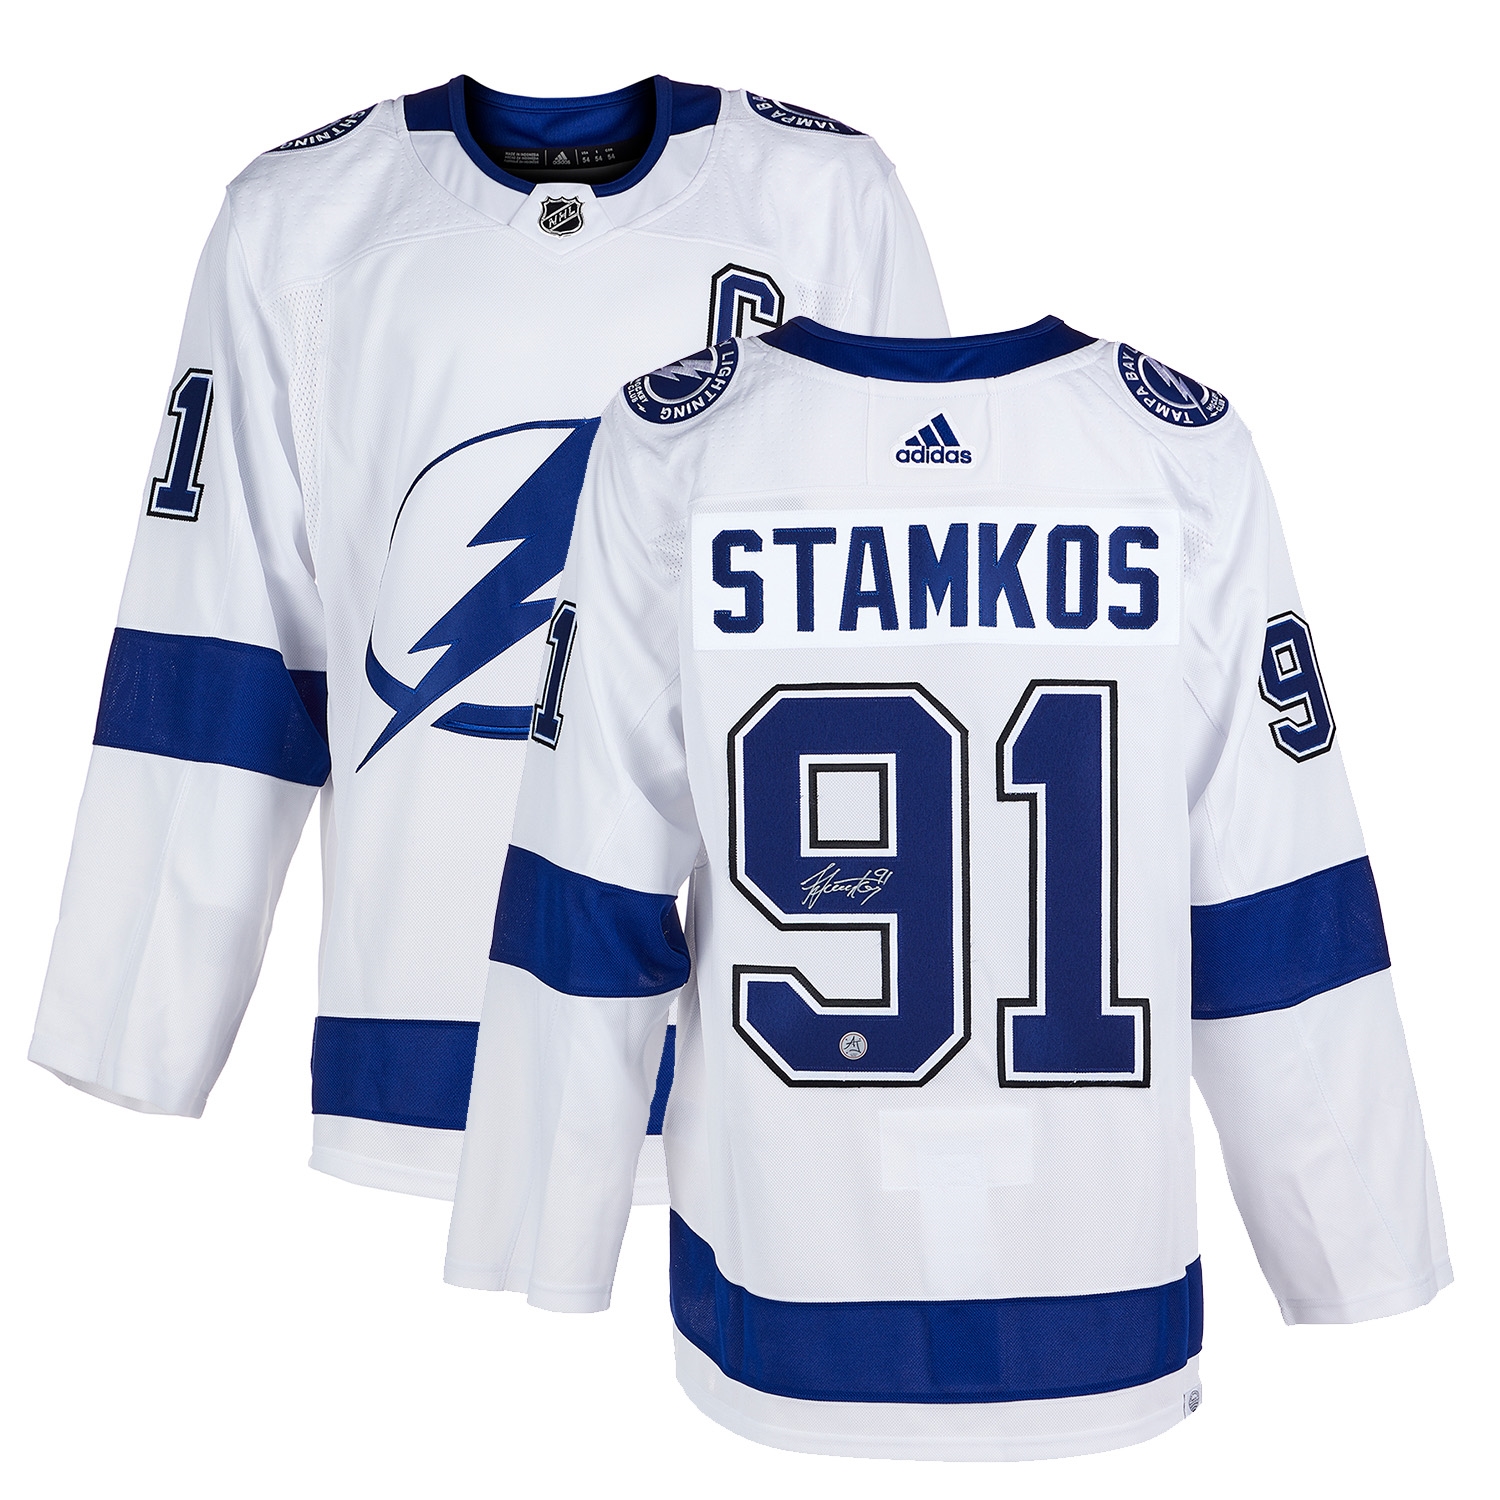 Steven Stamkos Signed Tampa Bay Lightning White Adidas Jersey